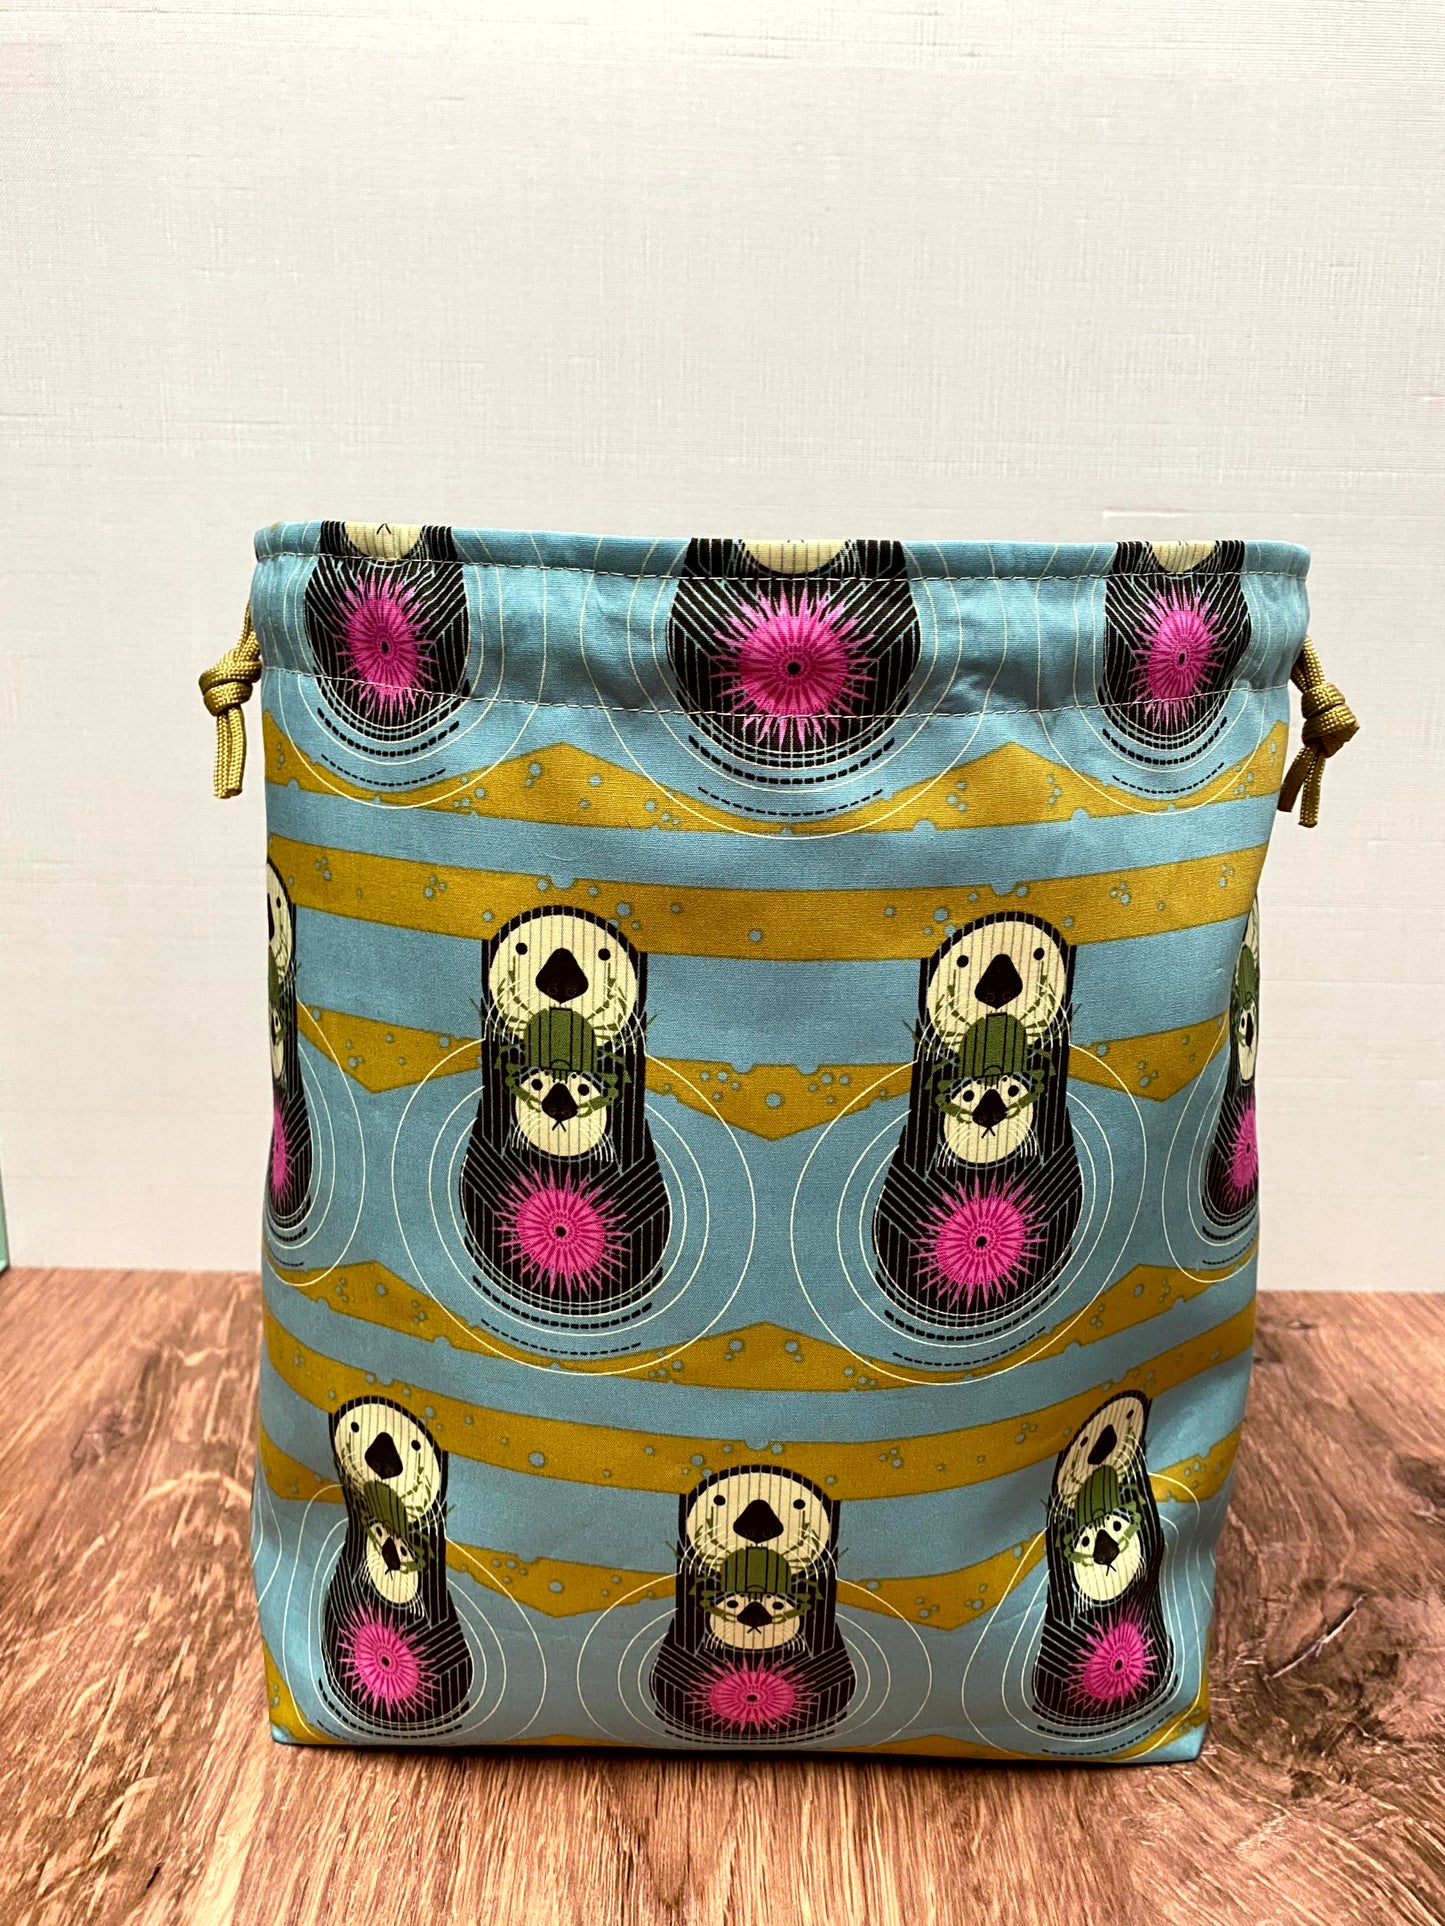 Otter Project Bag - Handmade - Drawstring Bag – Crochet Bag - Knitting Bag - Cross Stitch Bag - Animal - Zoo